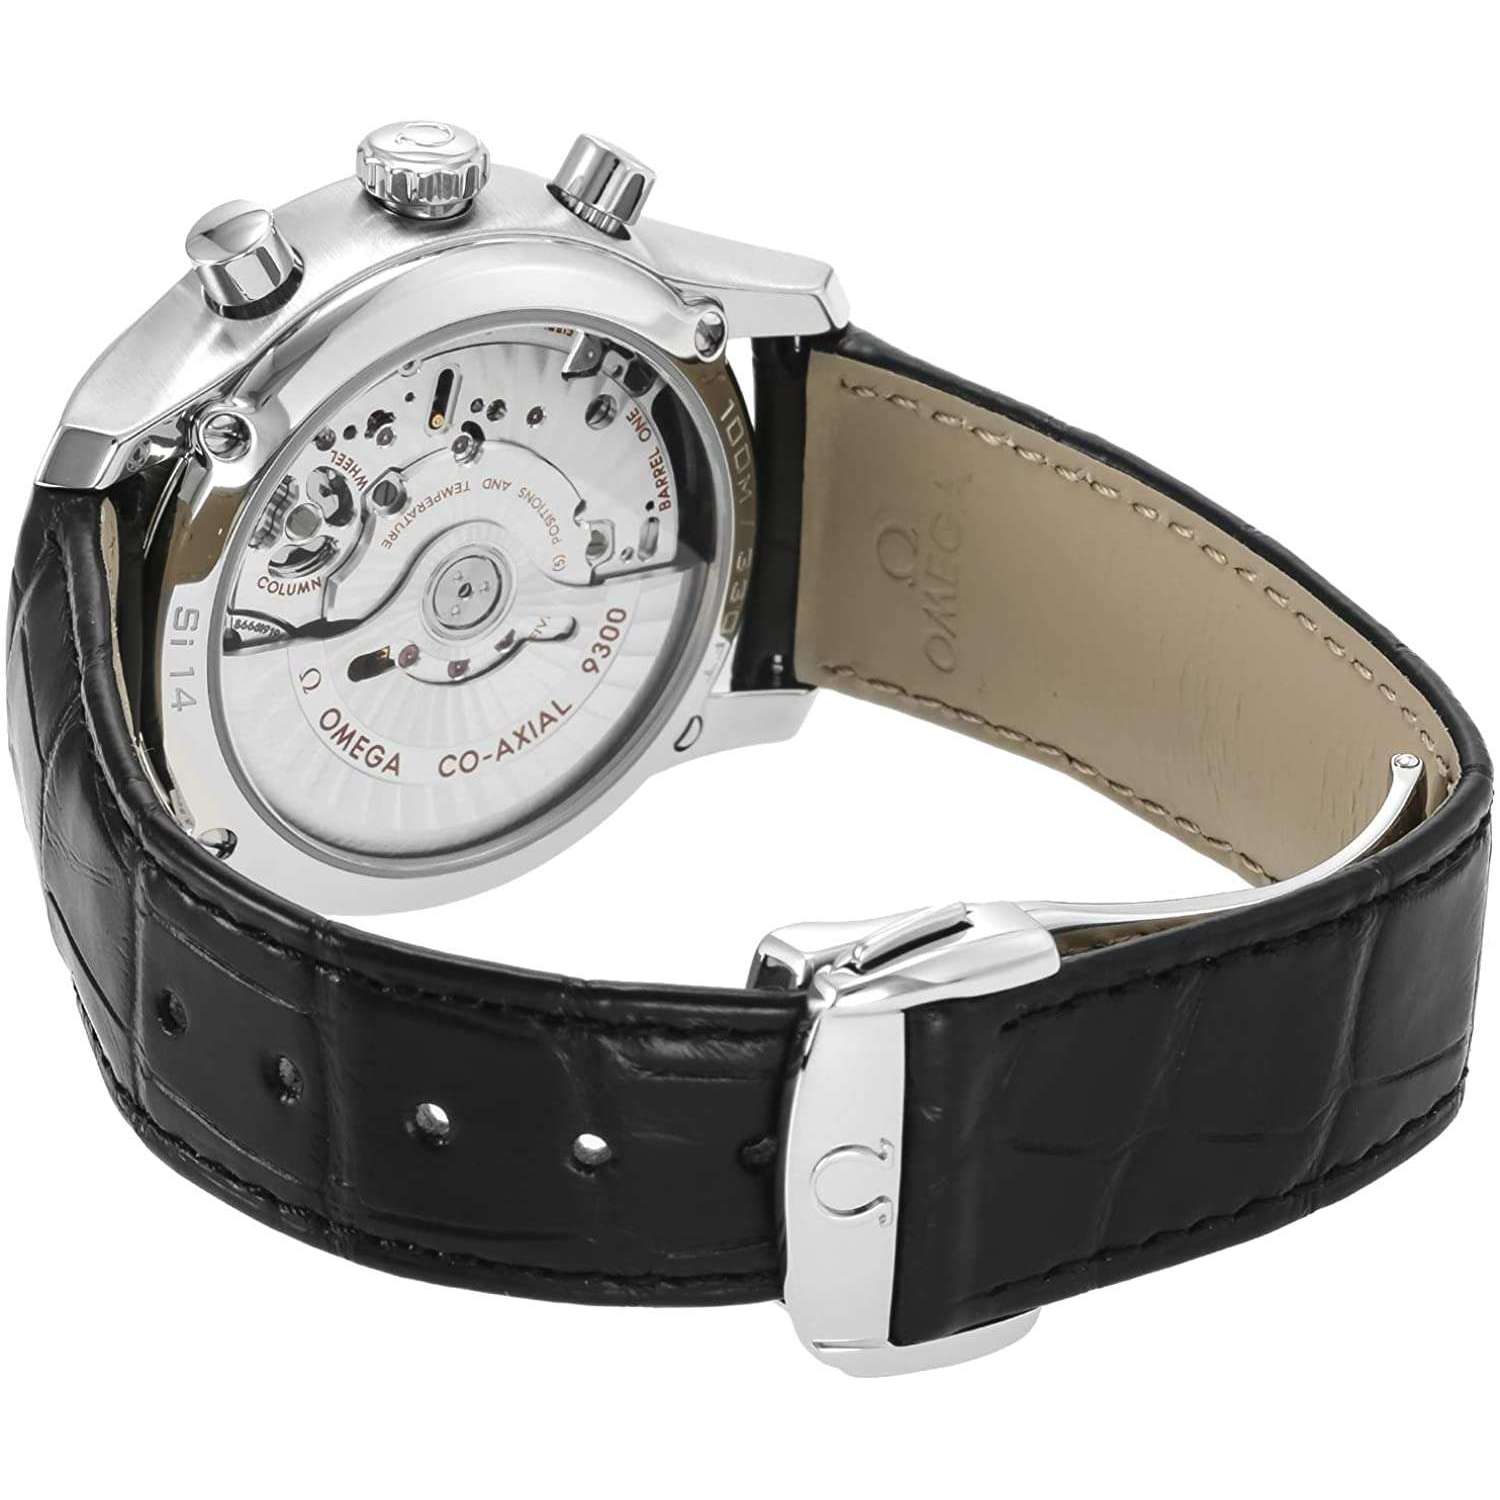 ROOK JAPAN:OMEGA DE VILLE CO-AXIAL CHRONOMETER 42 MM MEN WATCH 431.13.42.51.02.001,Luxury Watch,Omega